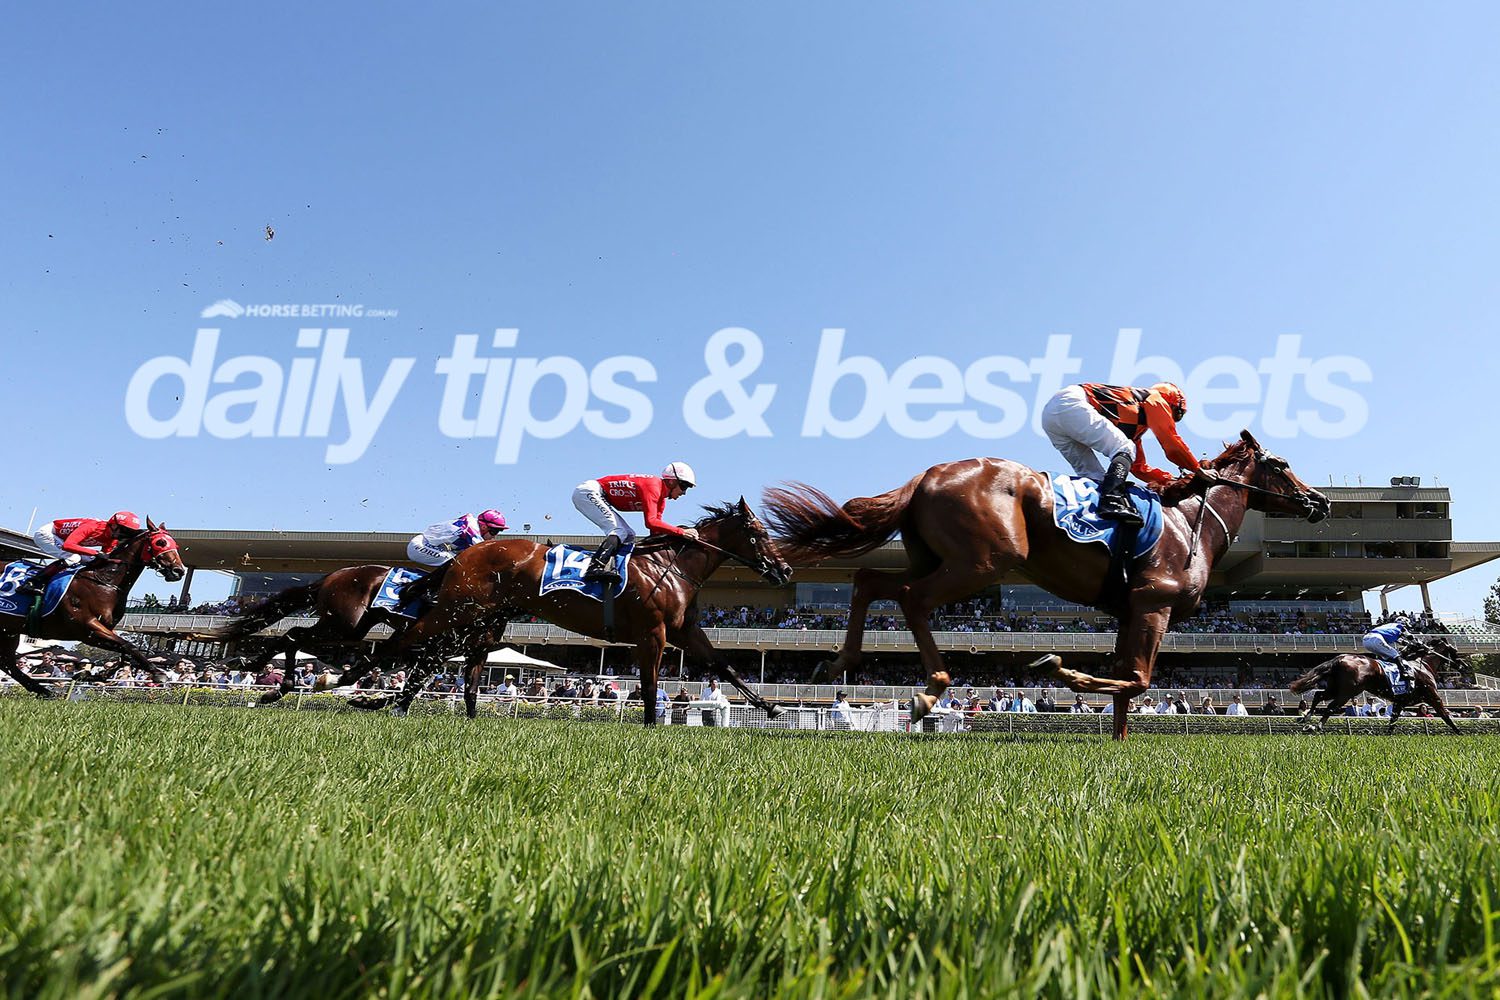 Thursday horse racing tips & best bets